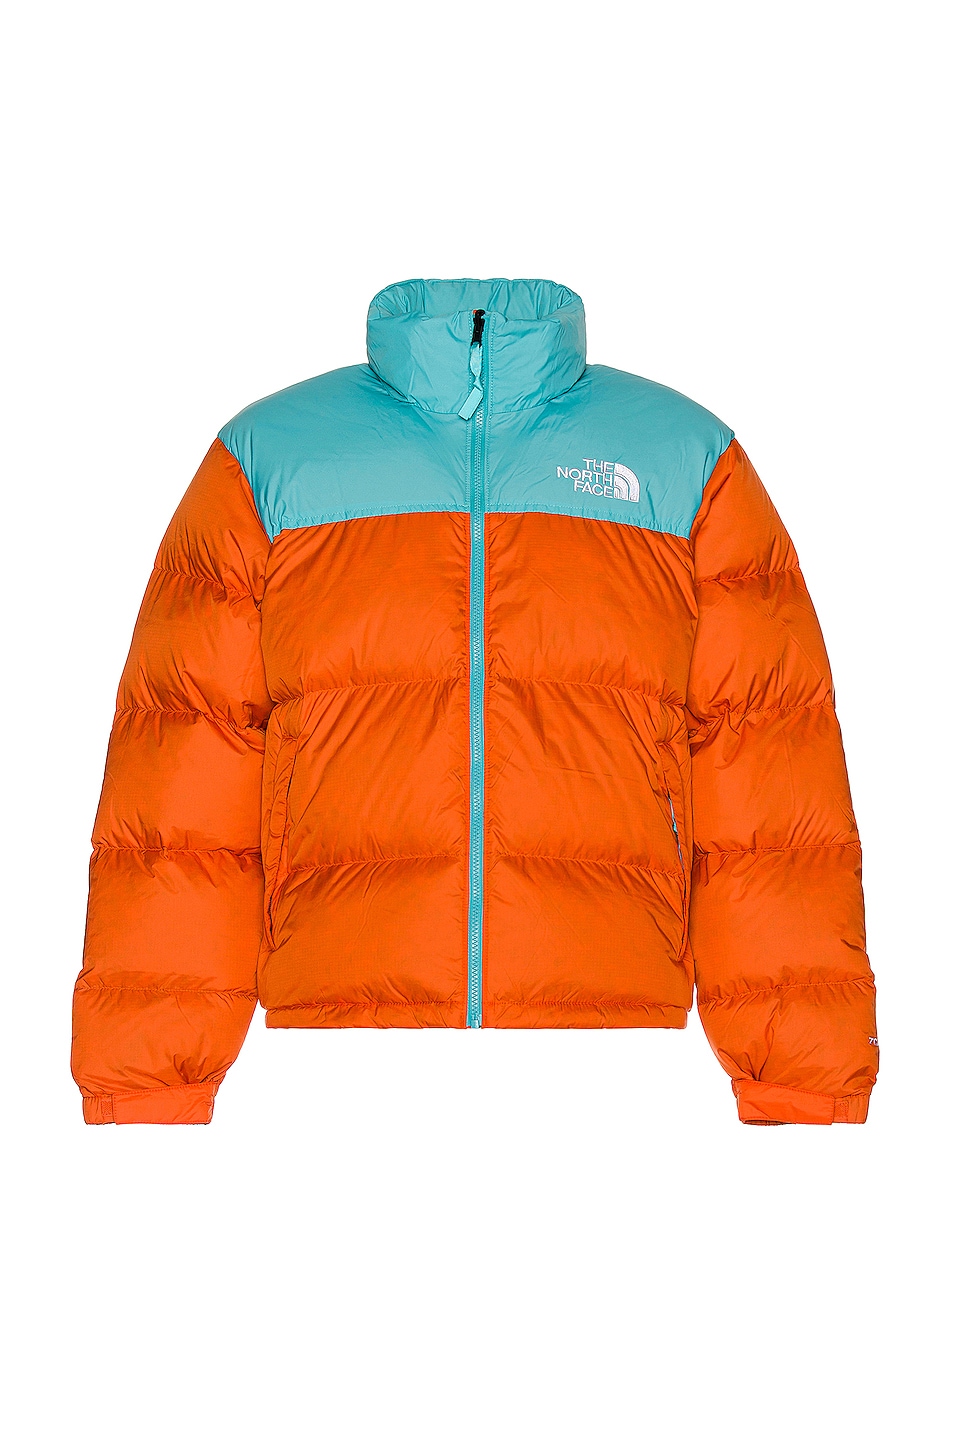 Image 1 of The North Face 1996 Retro Nuptse Jacket in Red Orange & Transantarctic Blue